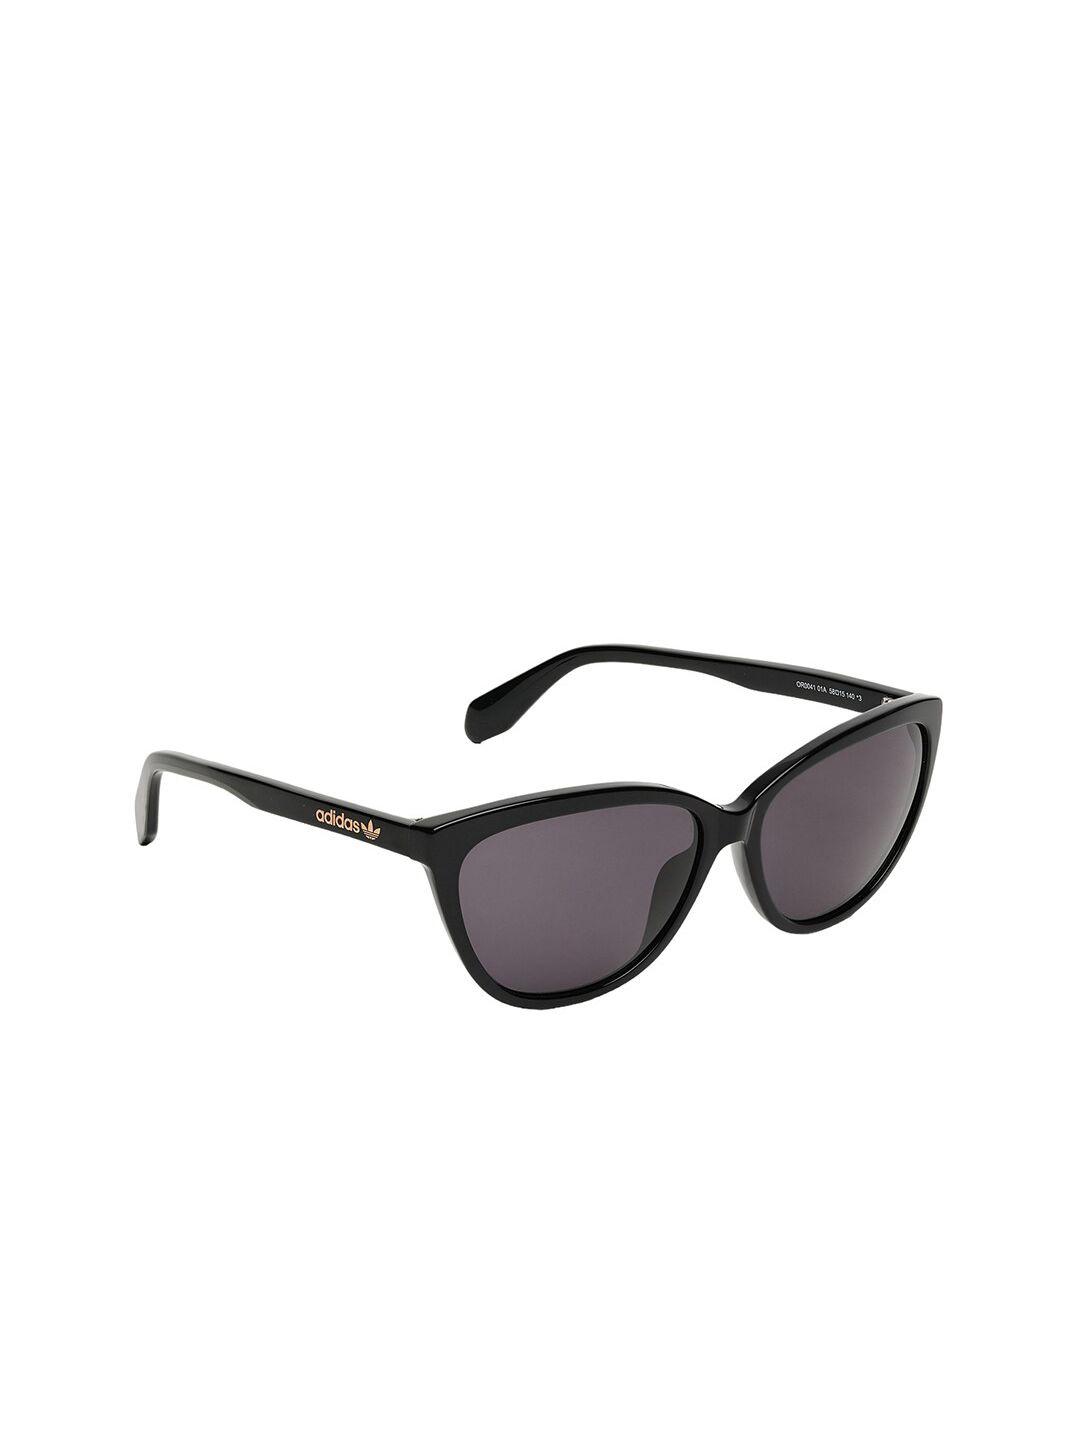 adidas-women-uv-protected-lens-cateye-sunglasses